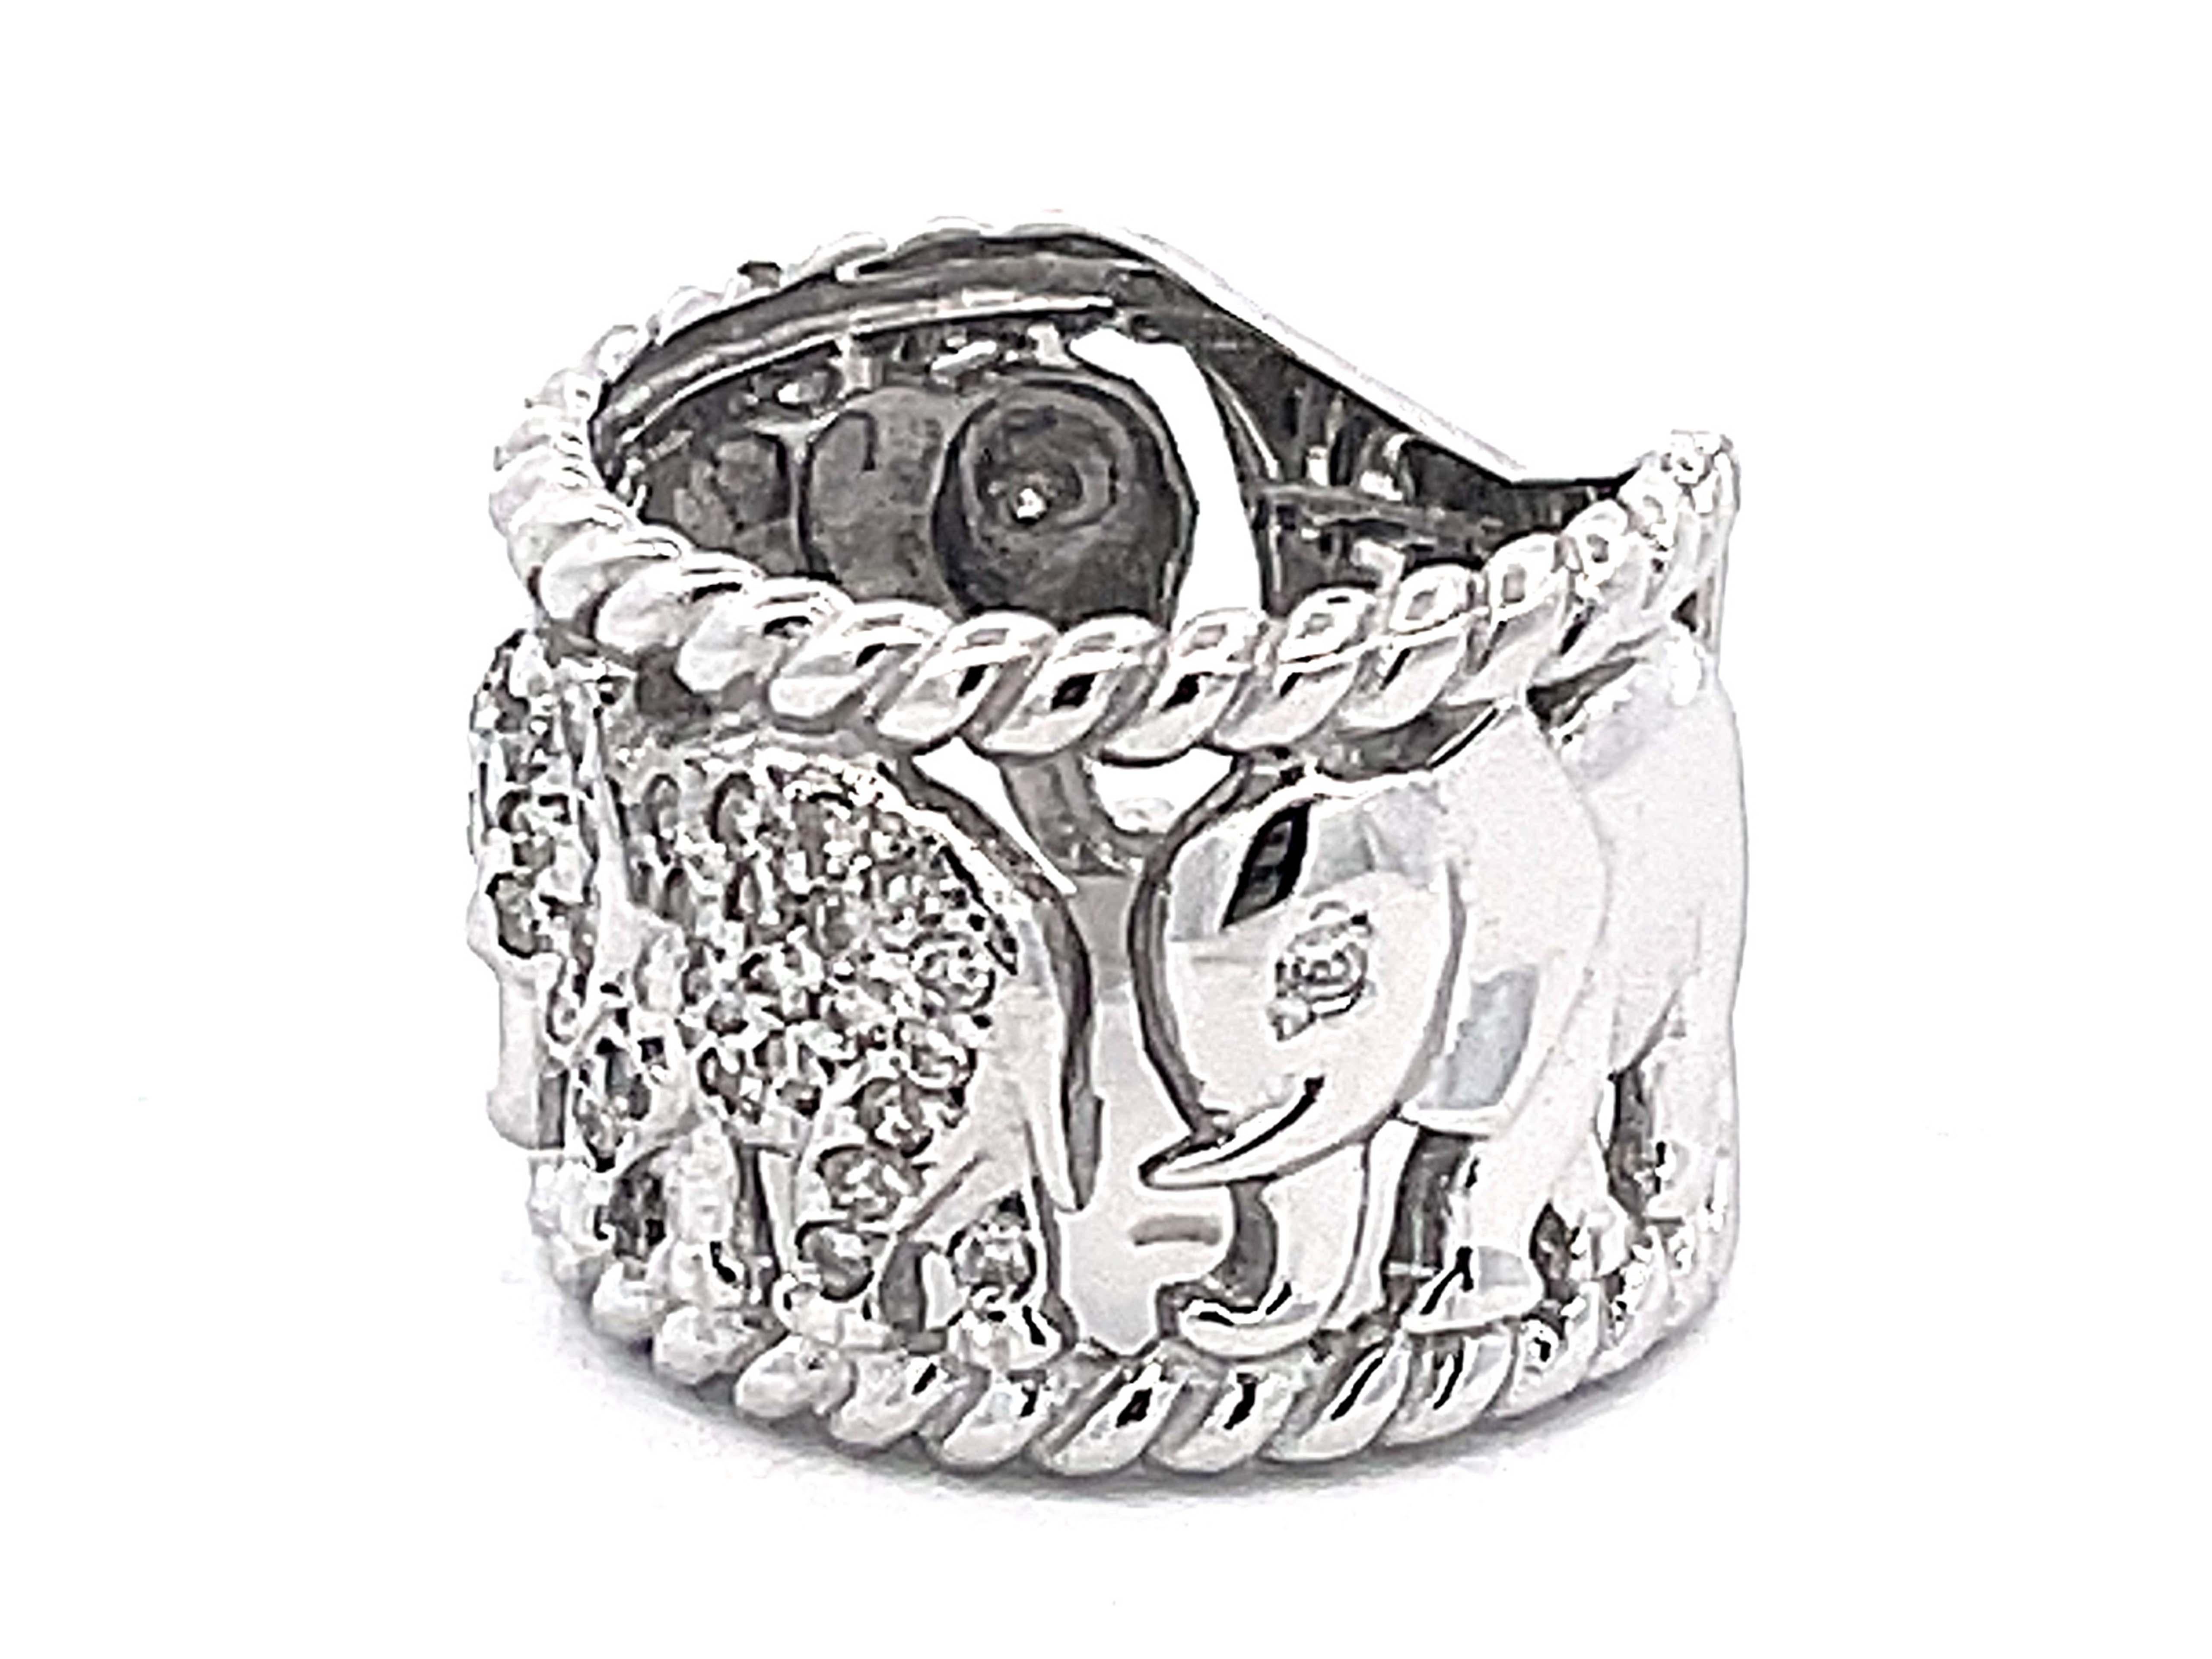 Brilliant Cut Multi Diamond Band Ring in 14k White Gold For Sale